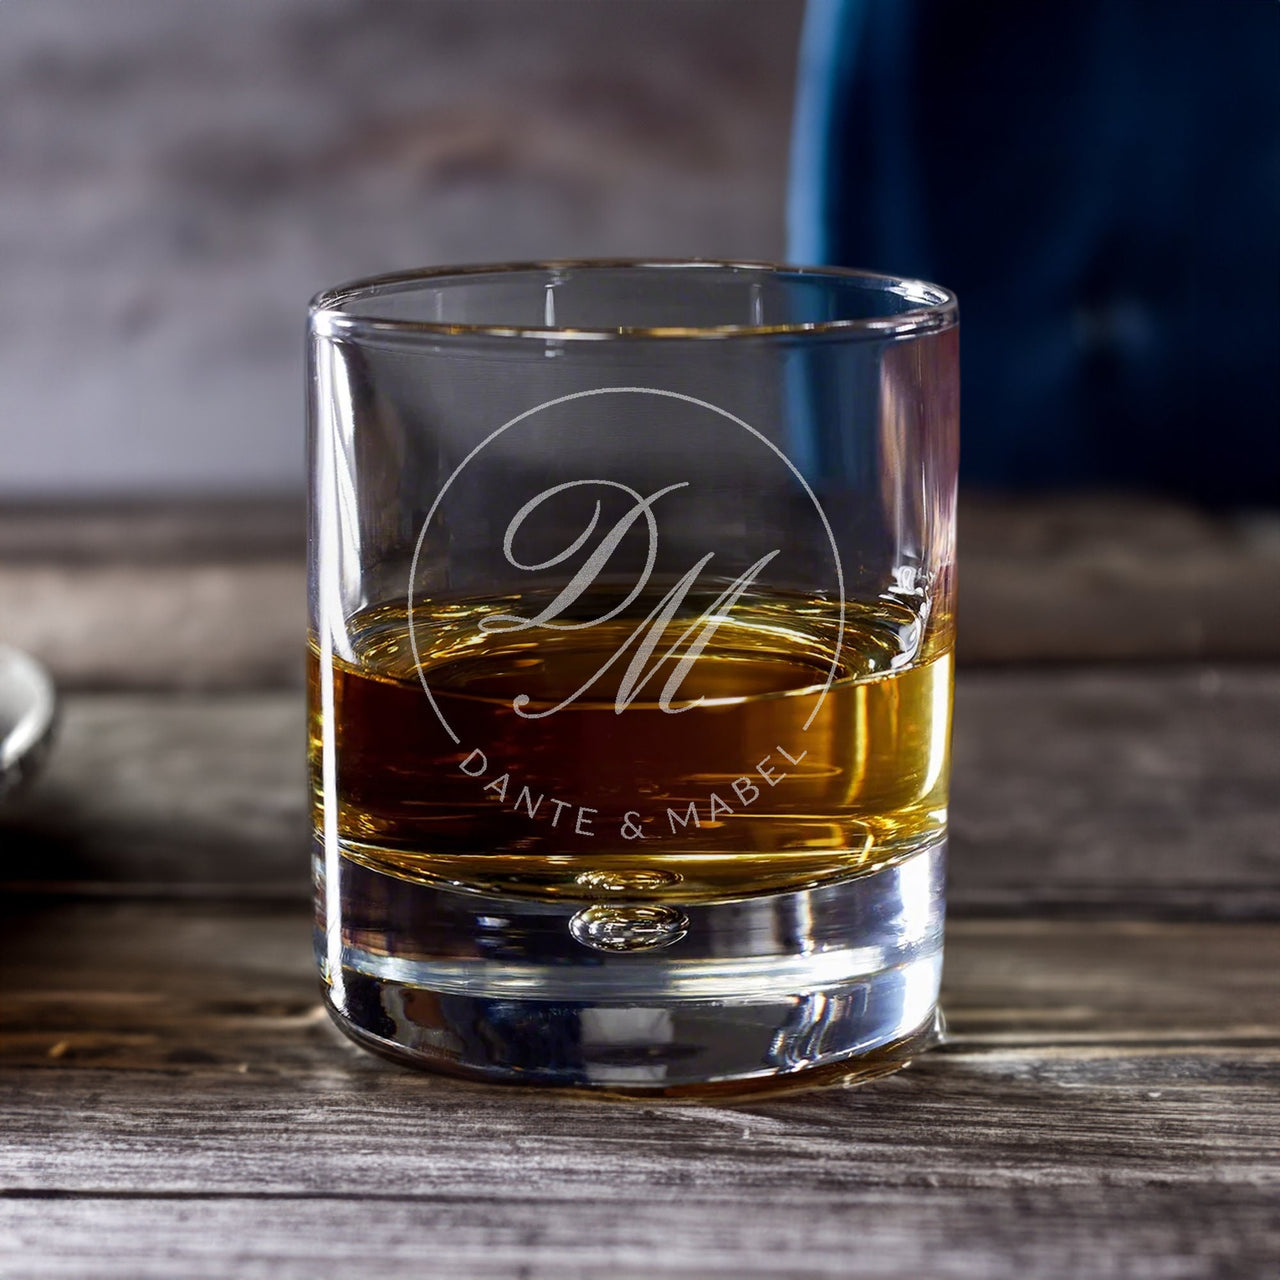 Custom Brand Logo 10.5oz Engraved Whiskey Glasses